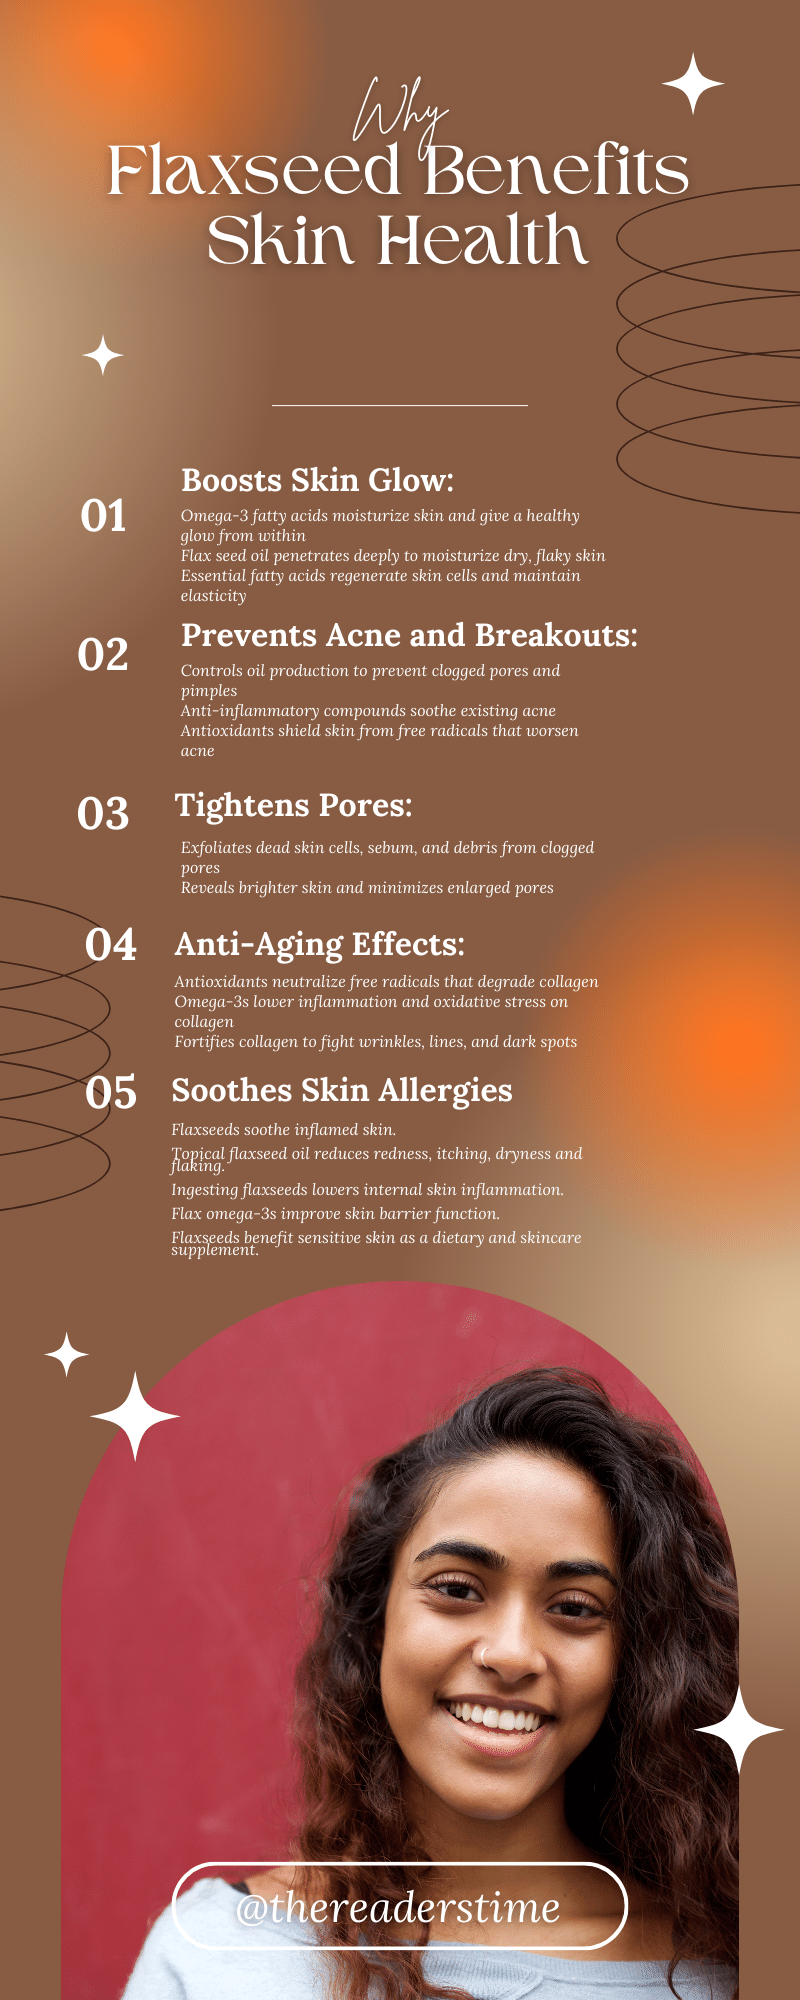 Why Flaxseed Benefits Skin Health infographic